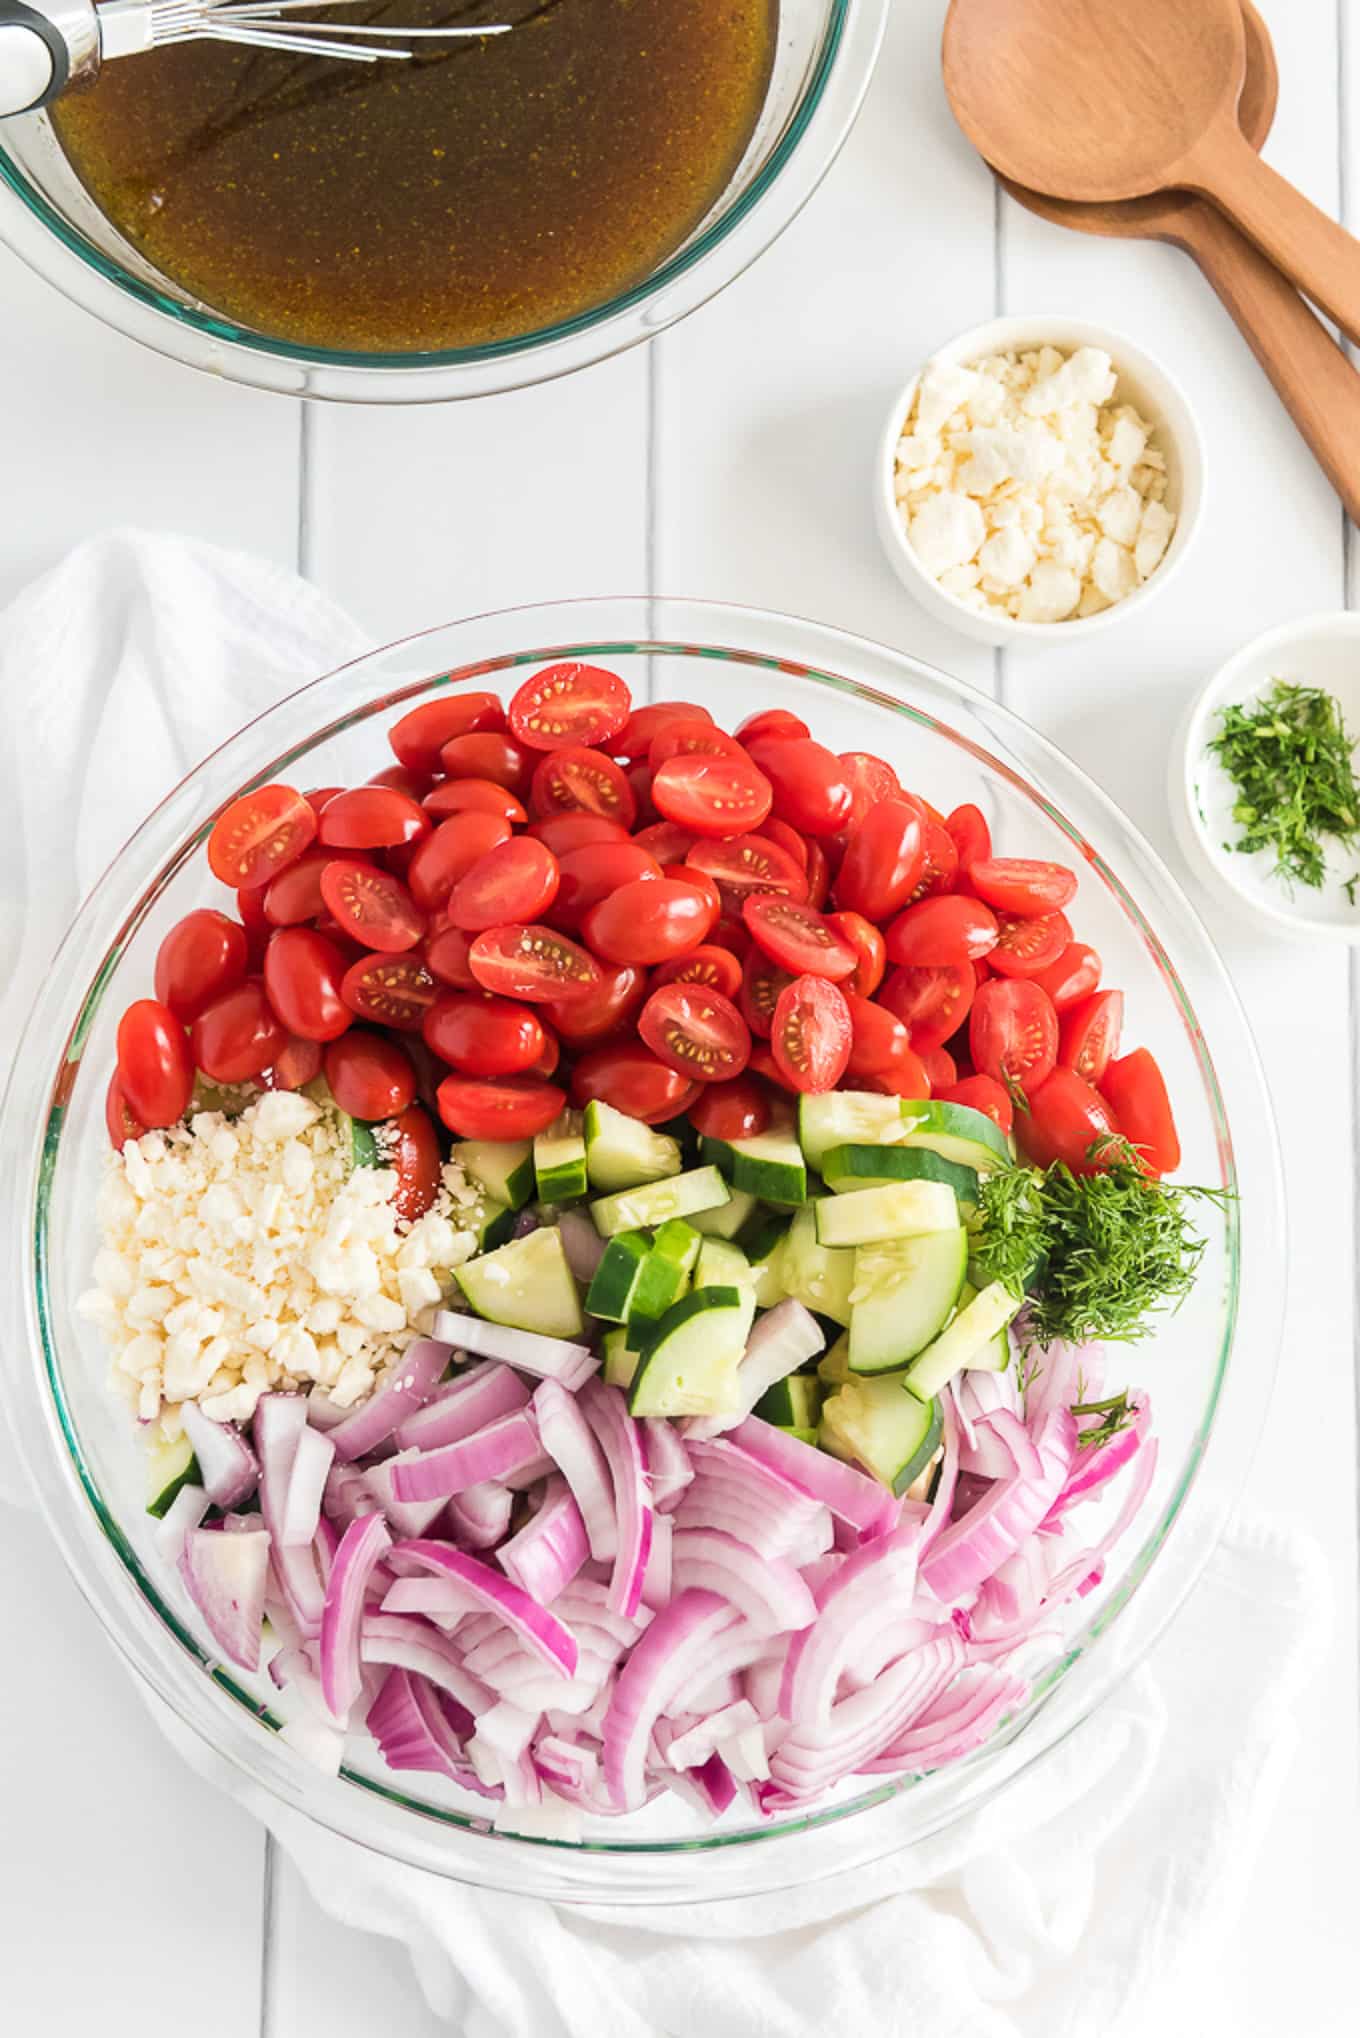 Fresh cut veggies in a bowl to make tomato cucumber salad.